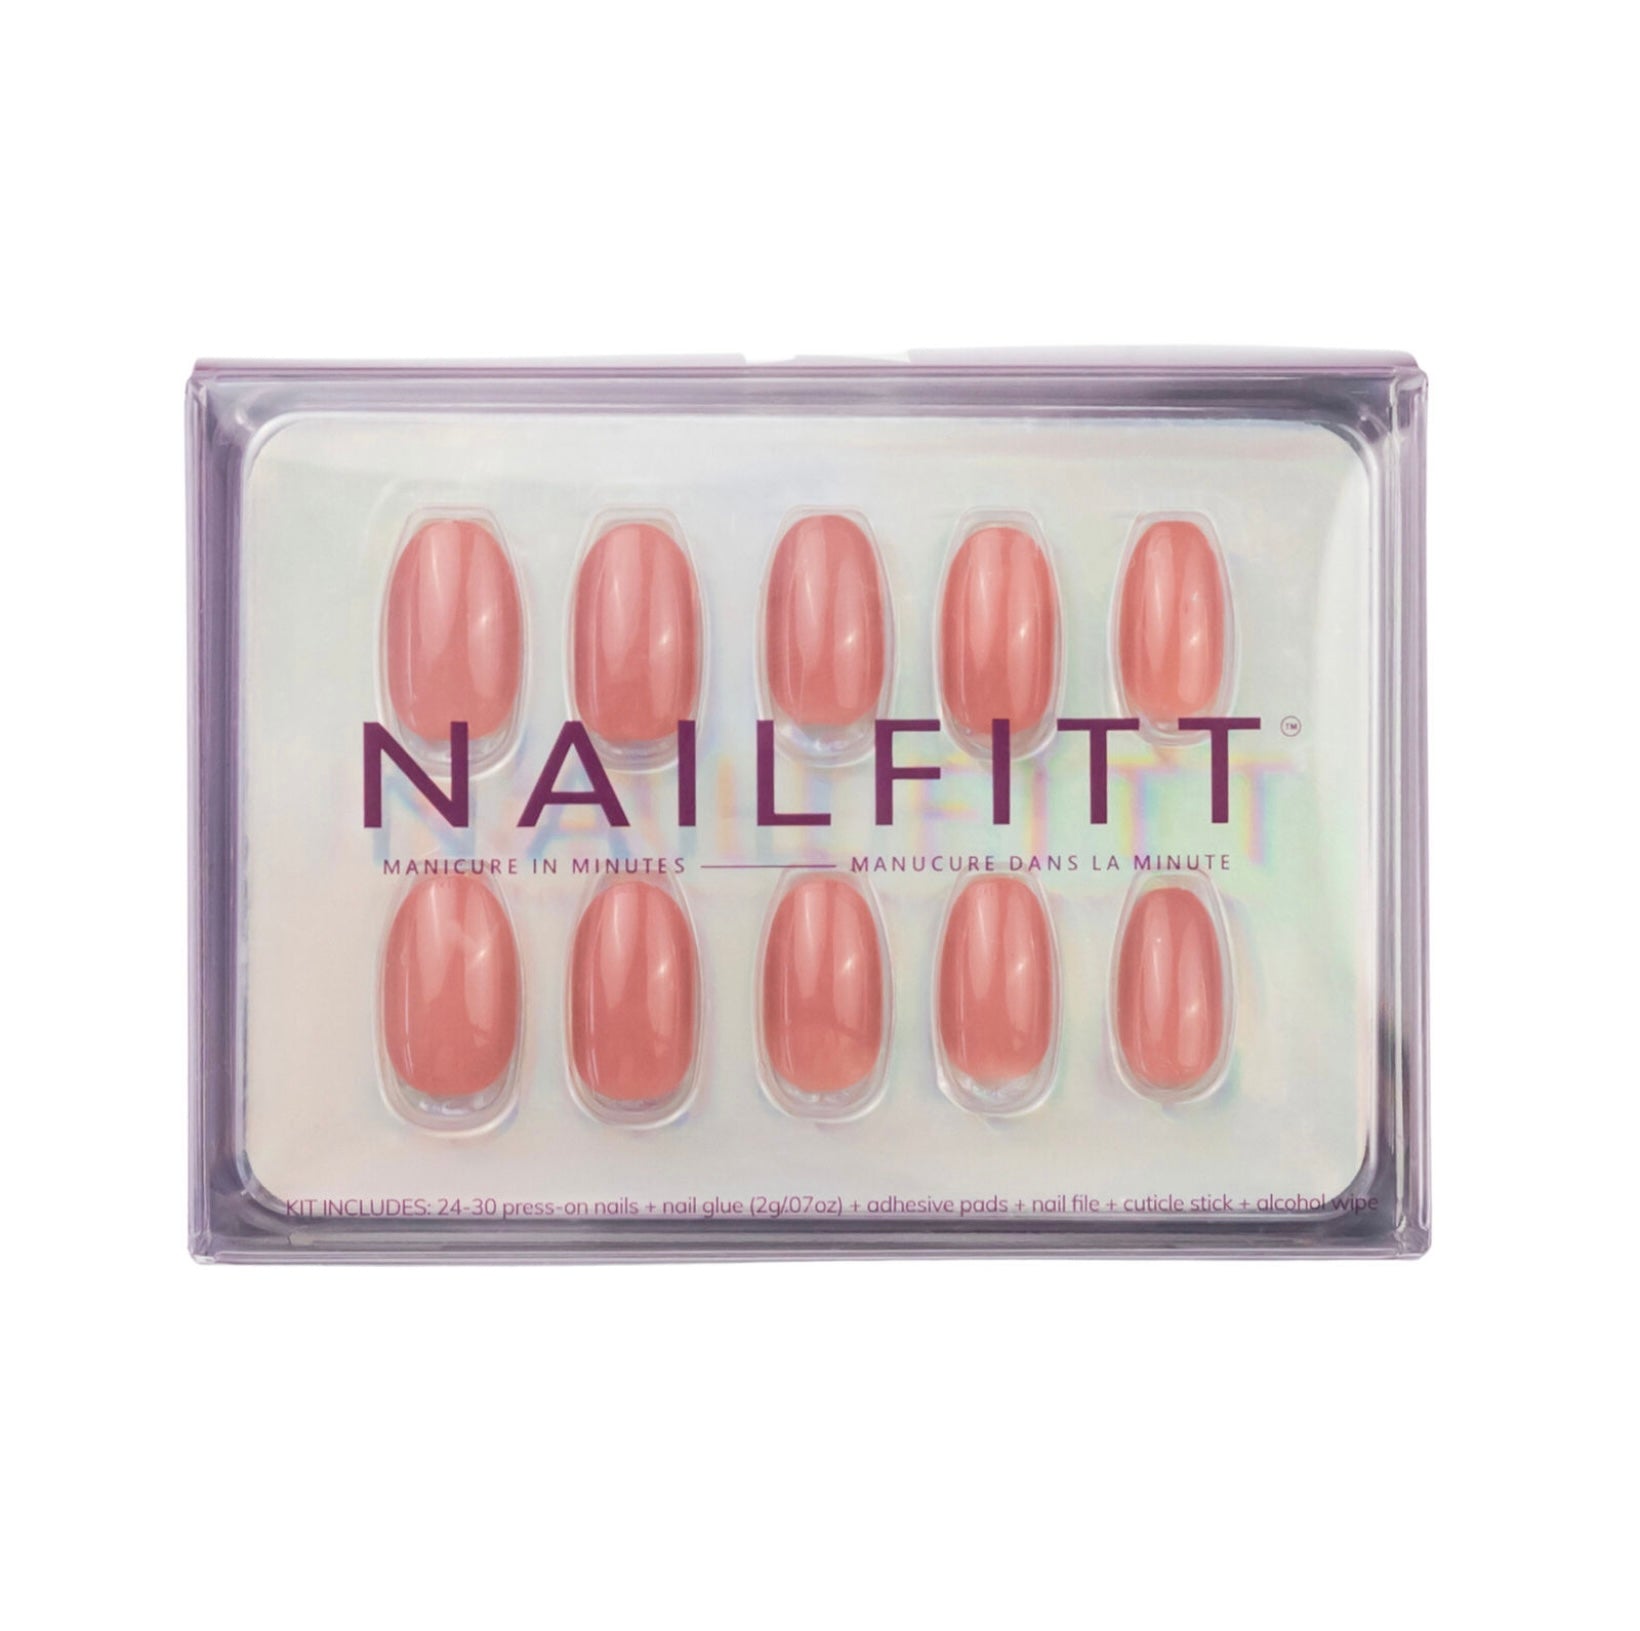 Peachy Keen peach coloured almond press-on nails from Nailfitt